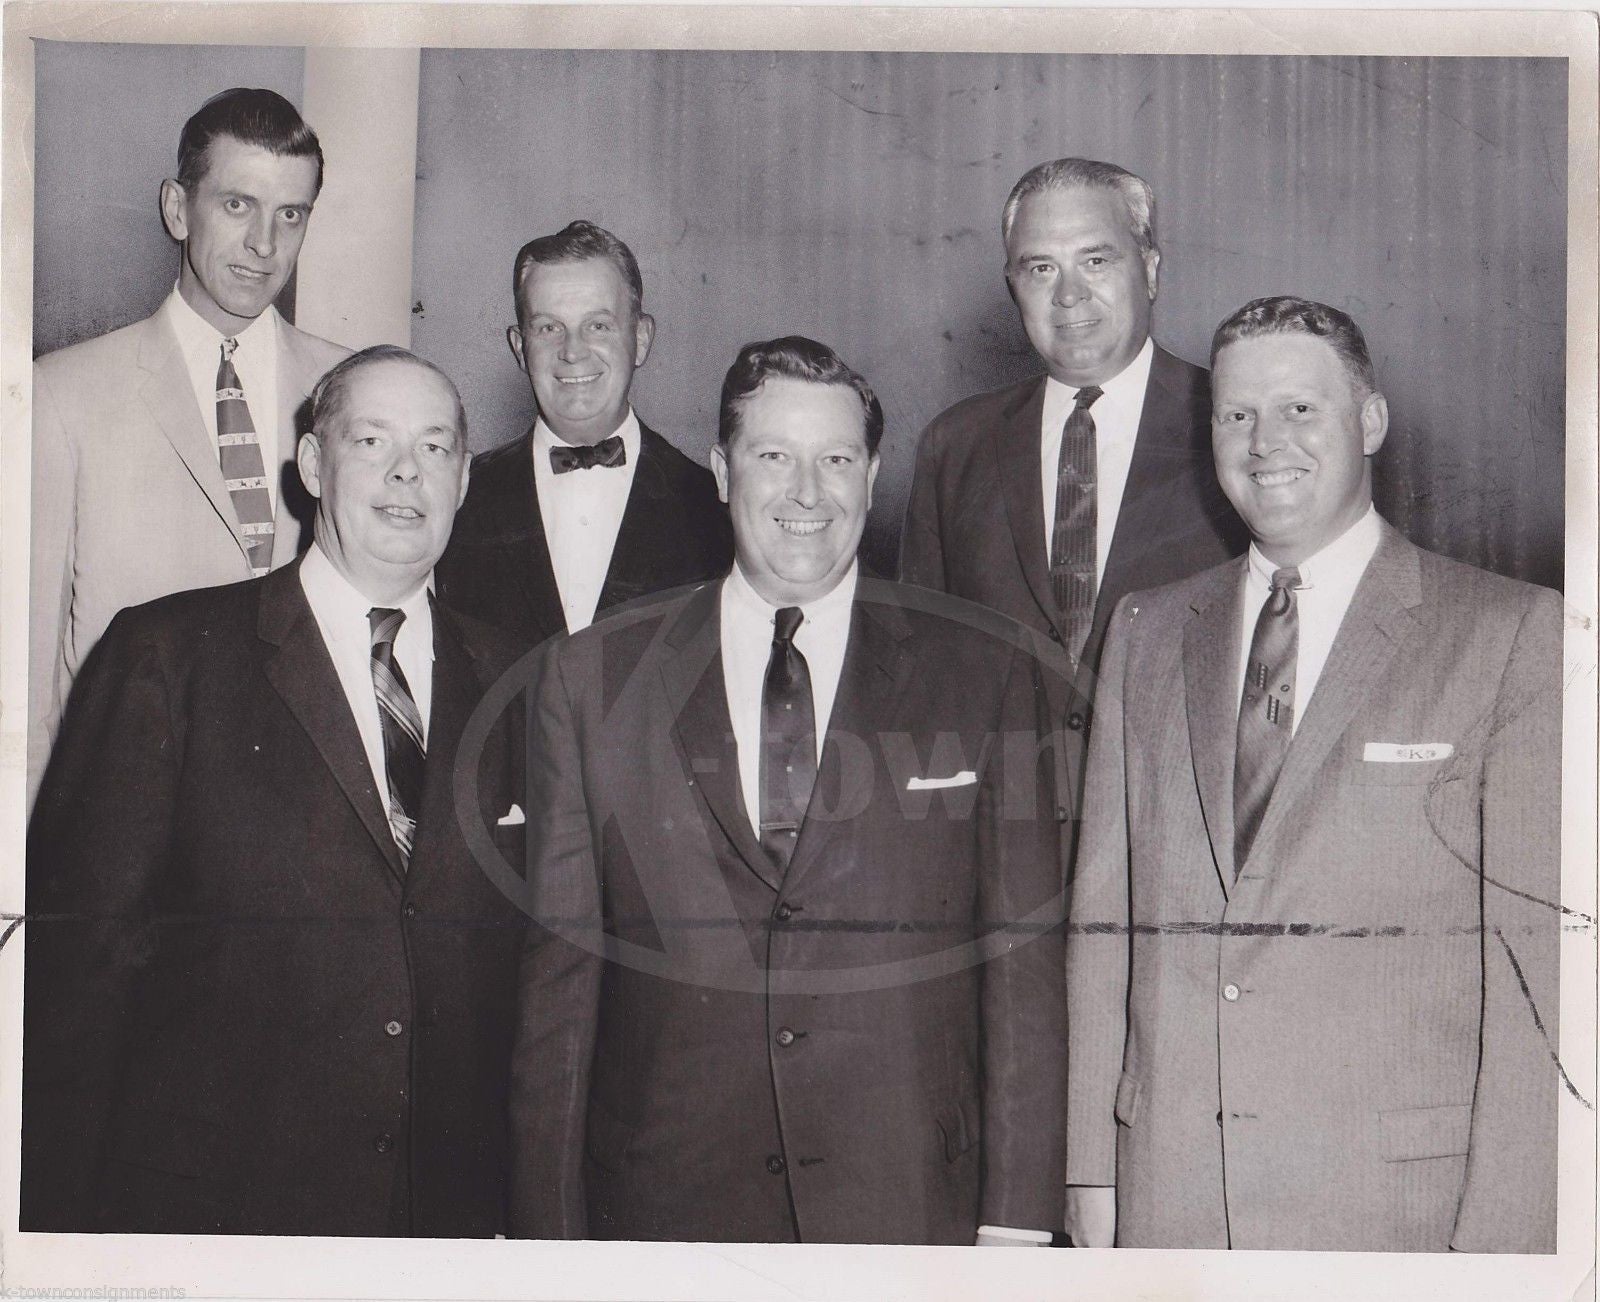 CHRYSLER MOTORS NOONAN REGIONAL MANAGERS MEETING VINTAGE NEWS PRESS PHOTO 1957 - K-townConsignments